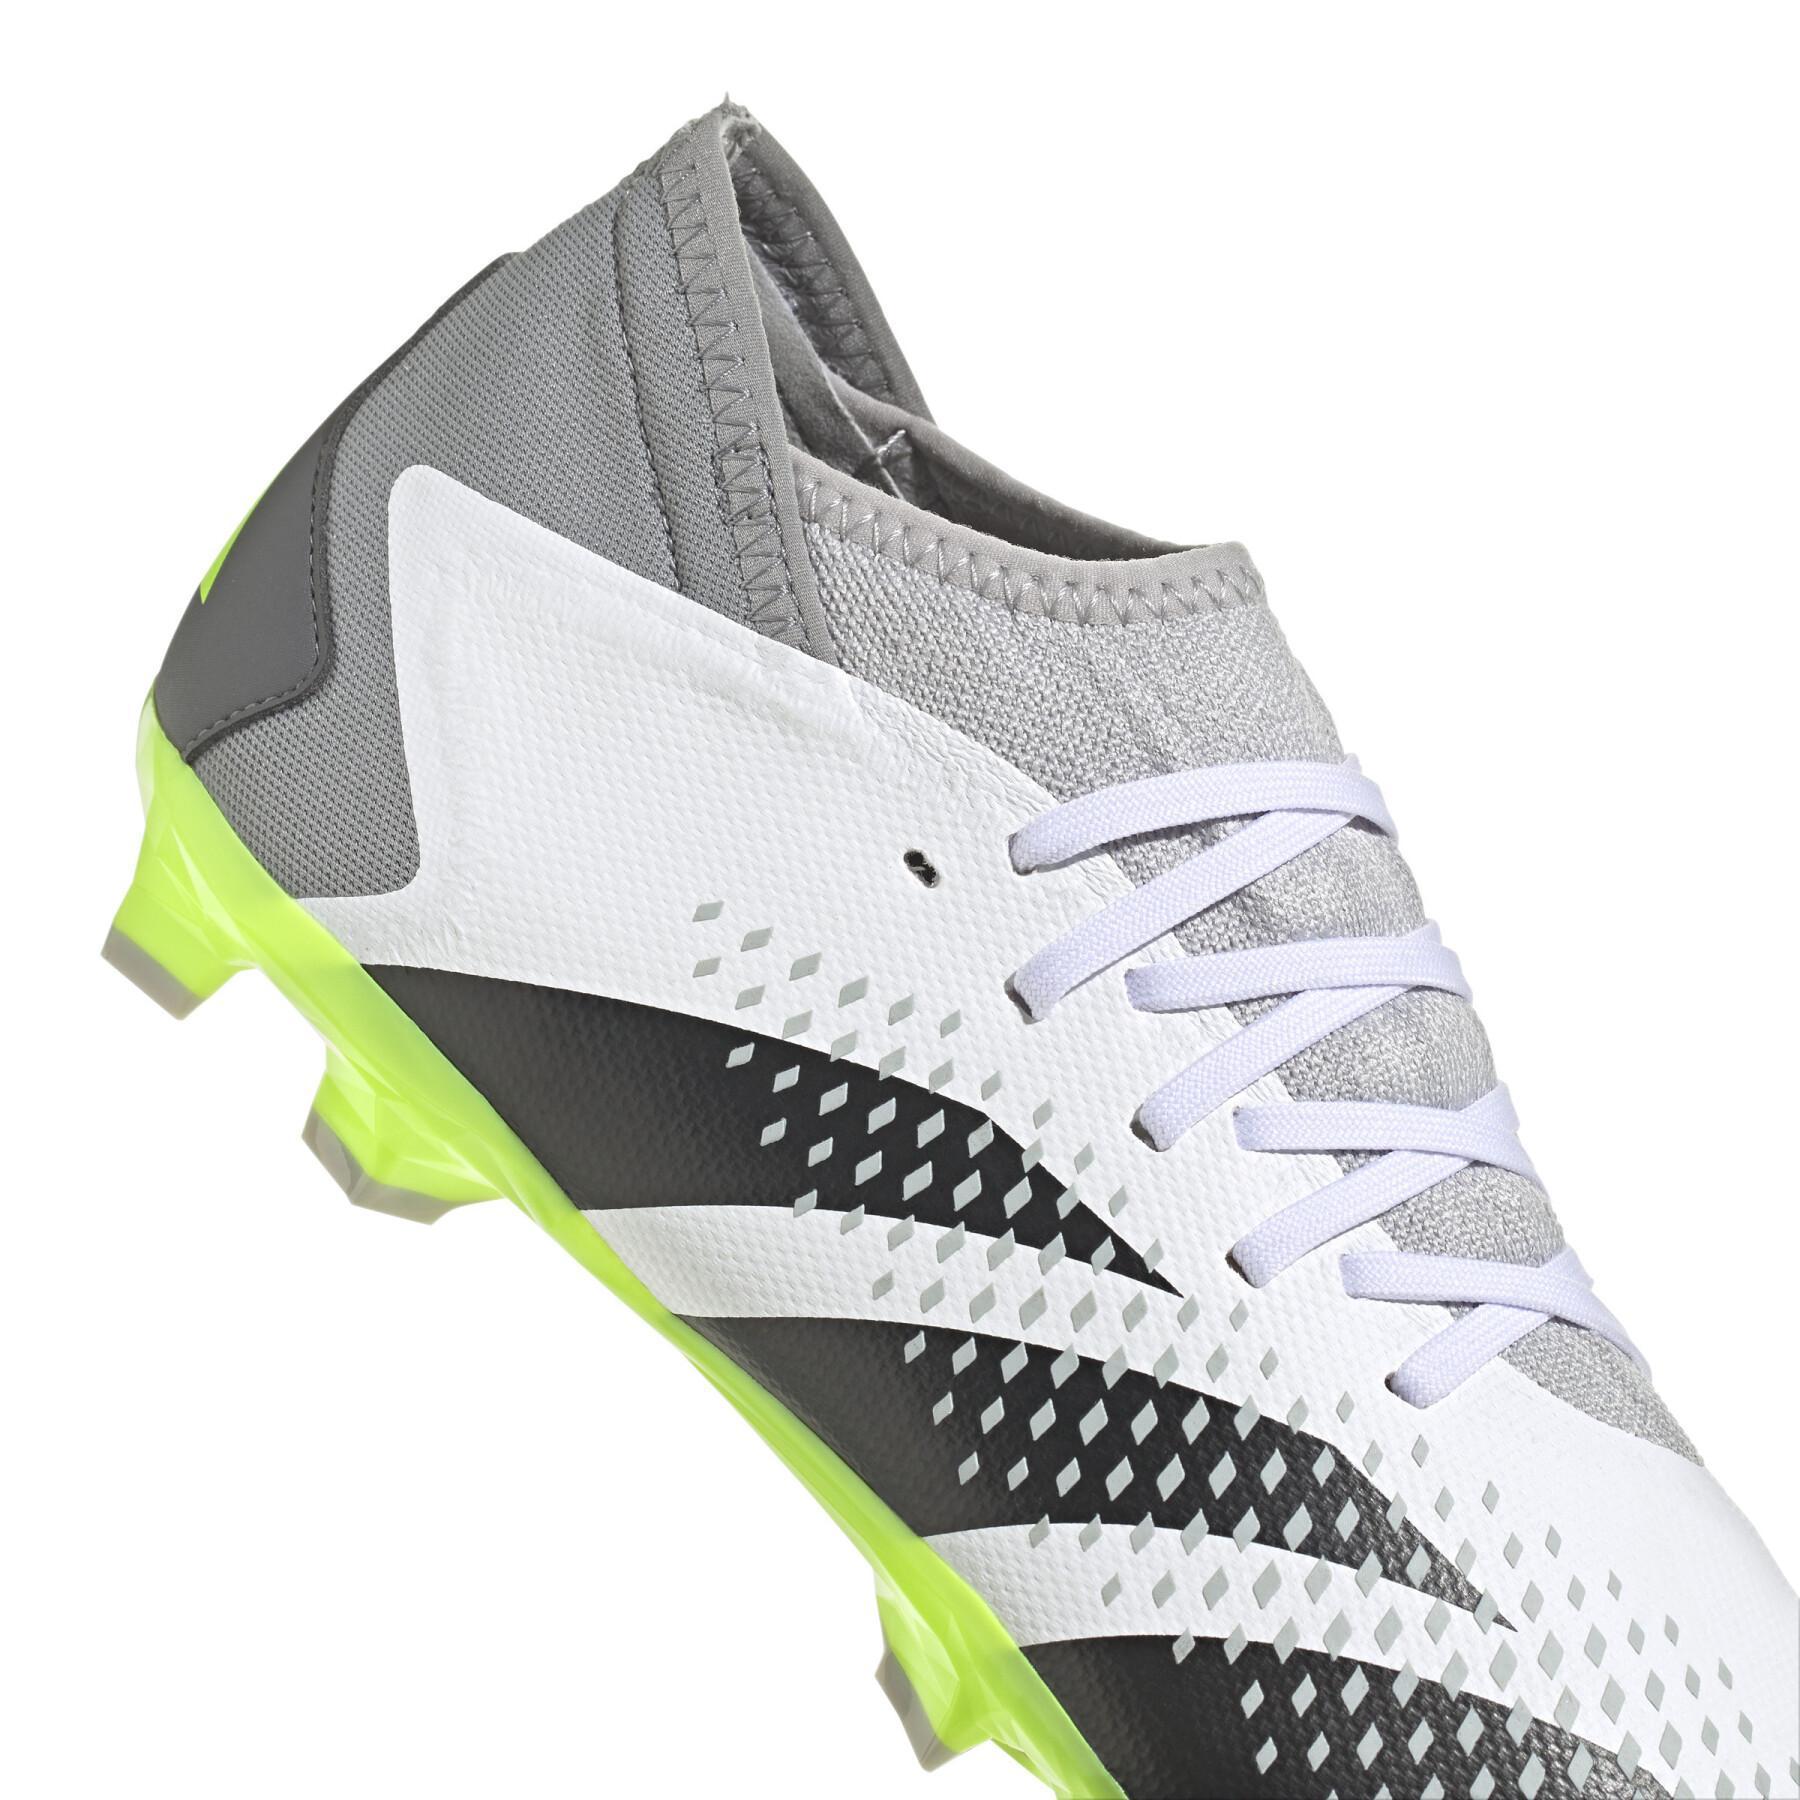 Chaussures de football adidas Predator Accuracy.3 AG